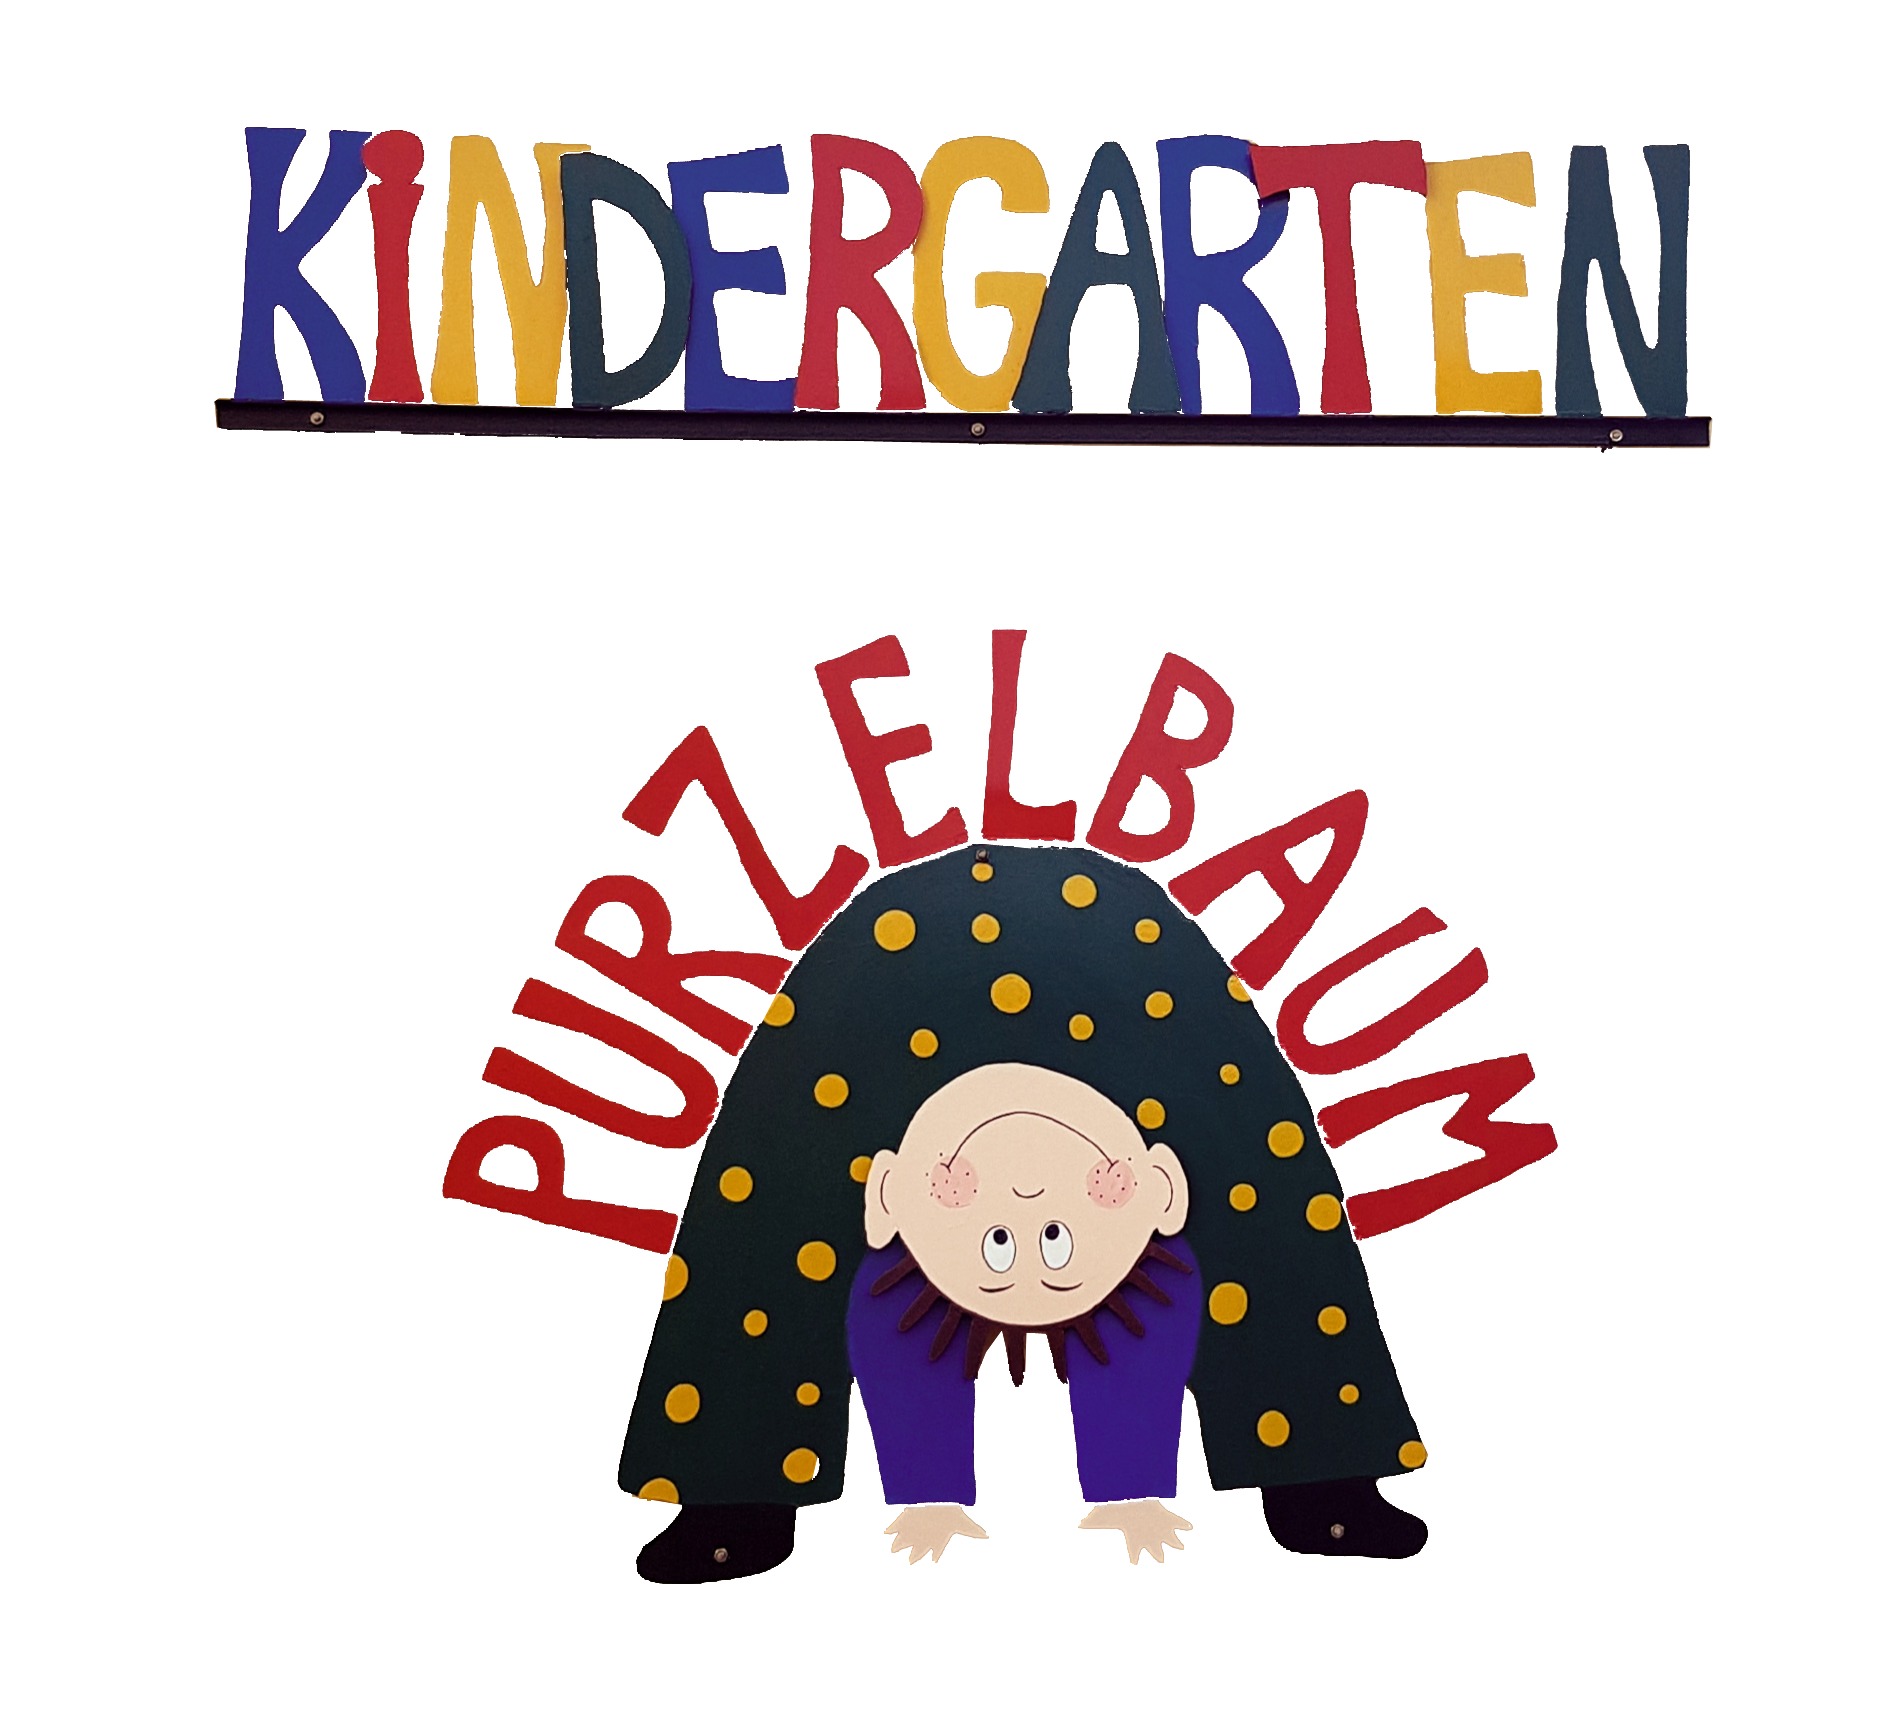 Kindergarten Purzelbaum